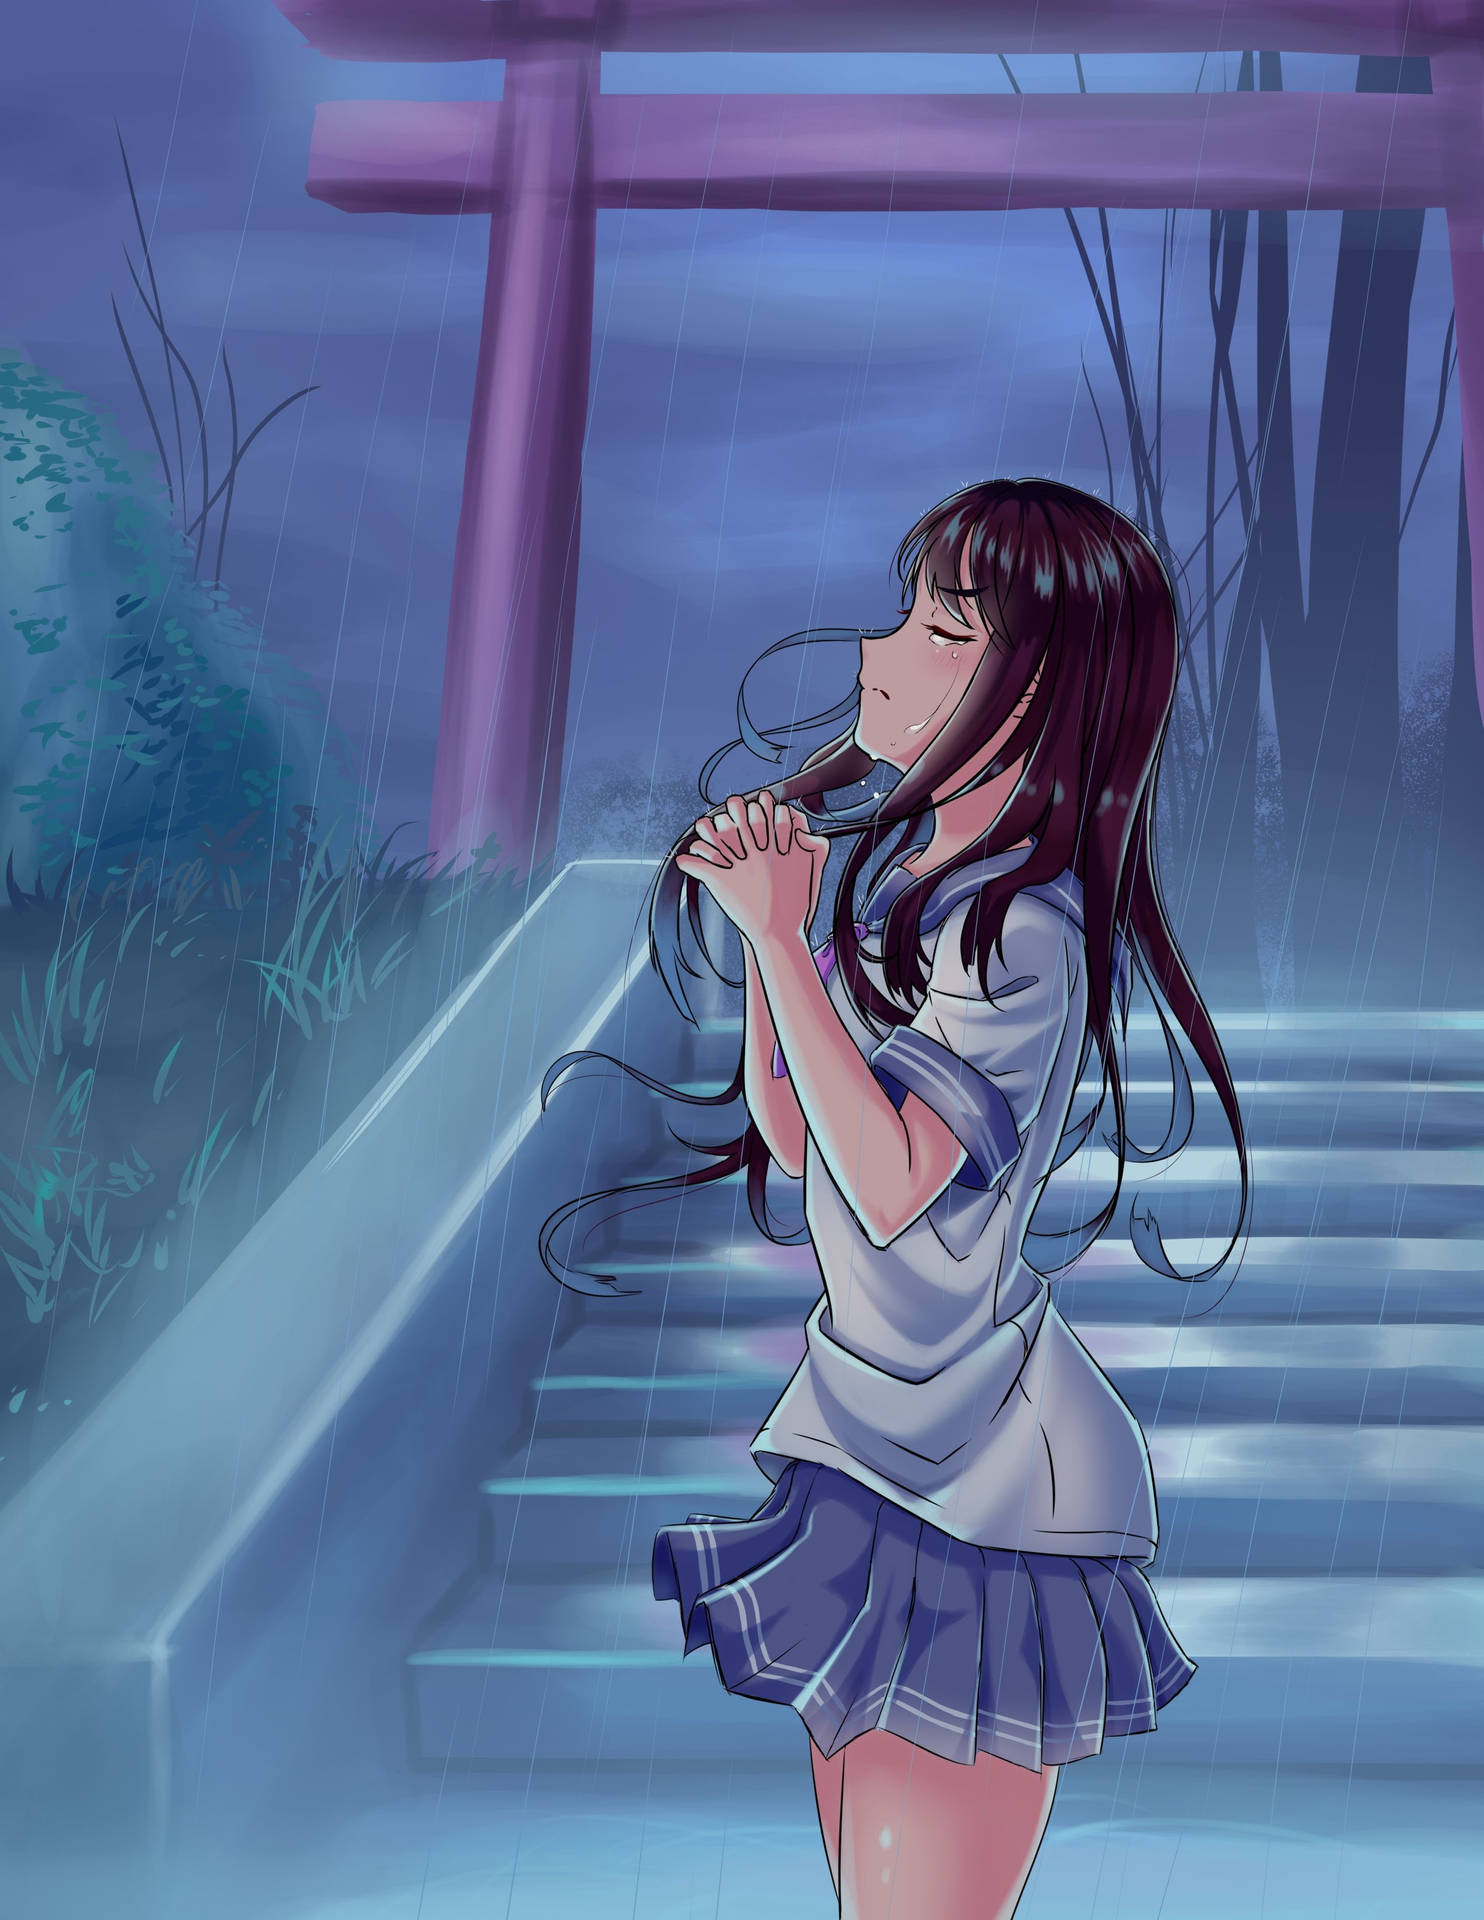 Aesthetic Sad Anime Girl Praying In Rain Background